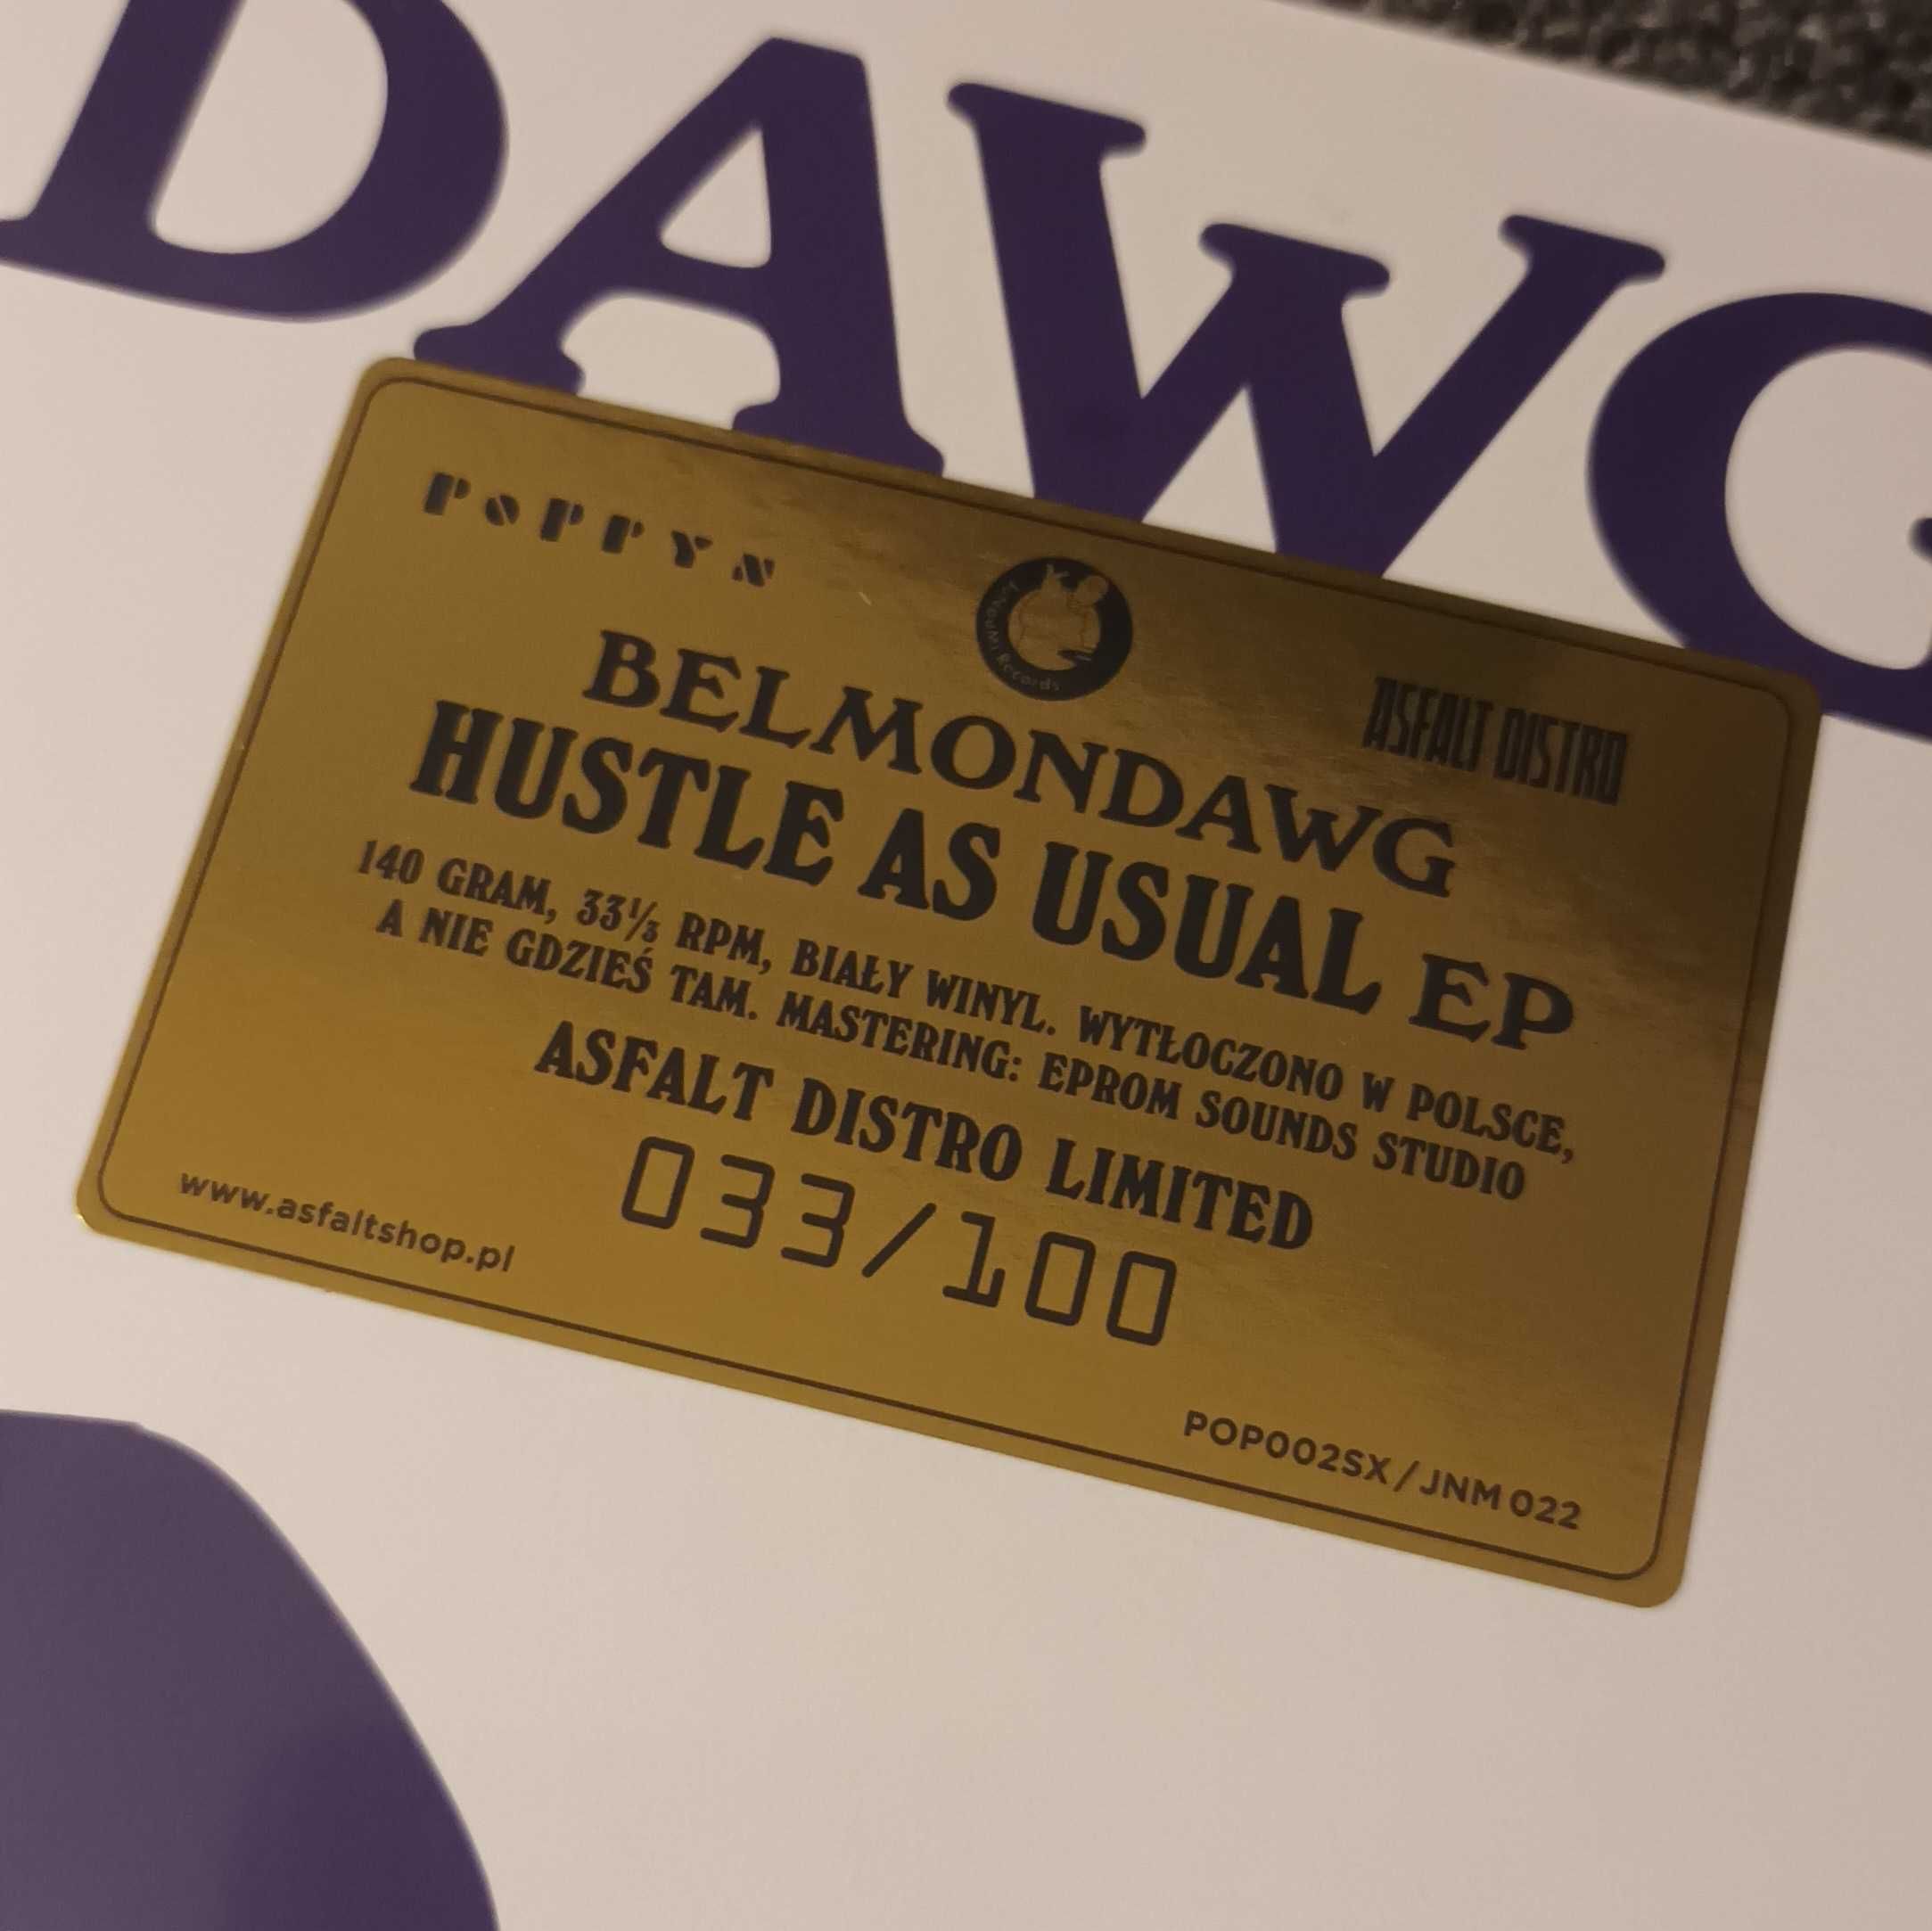 Belmondawg (Belmondo) - Hustle as Usual (H.A.U.) EP